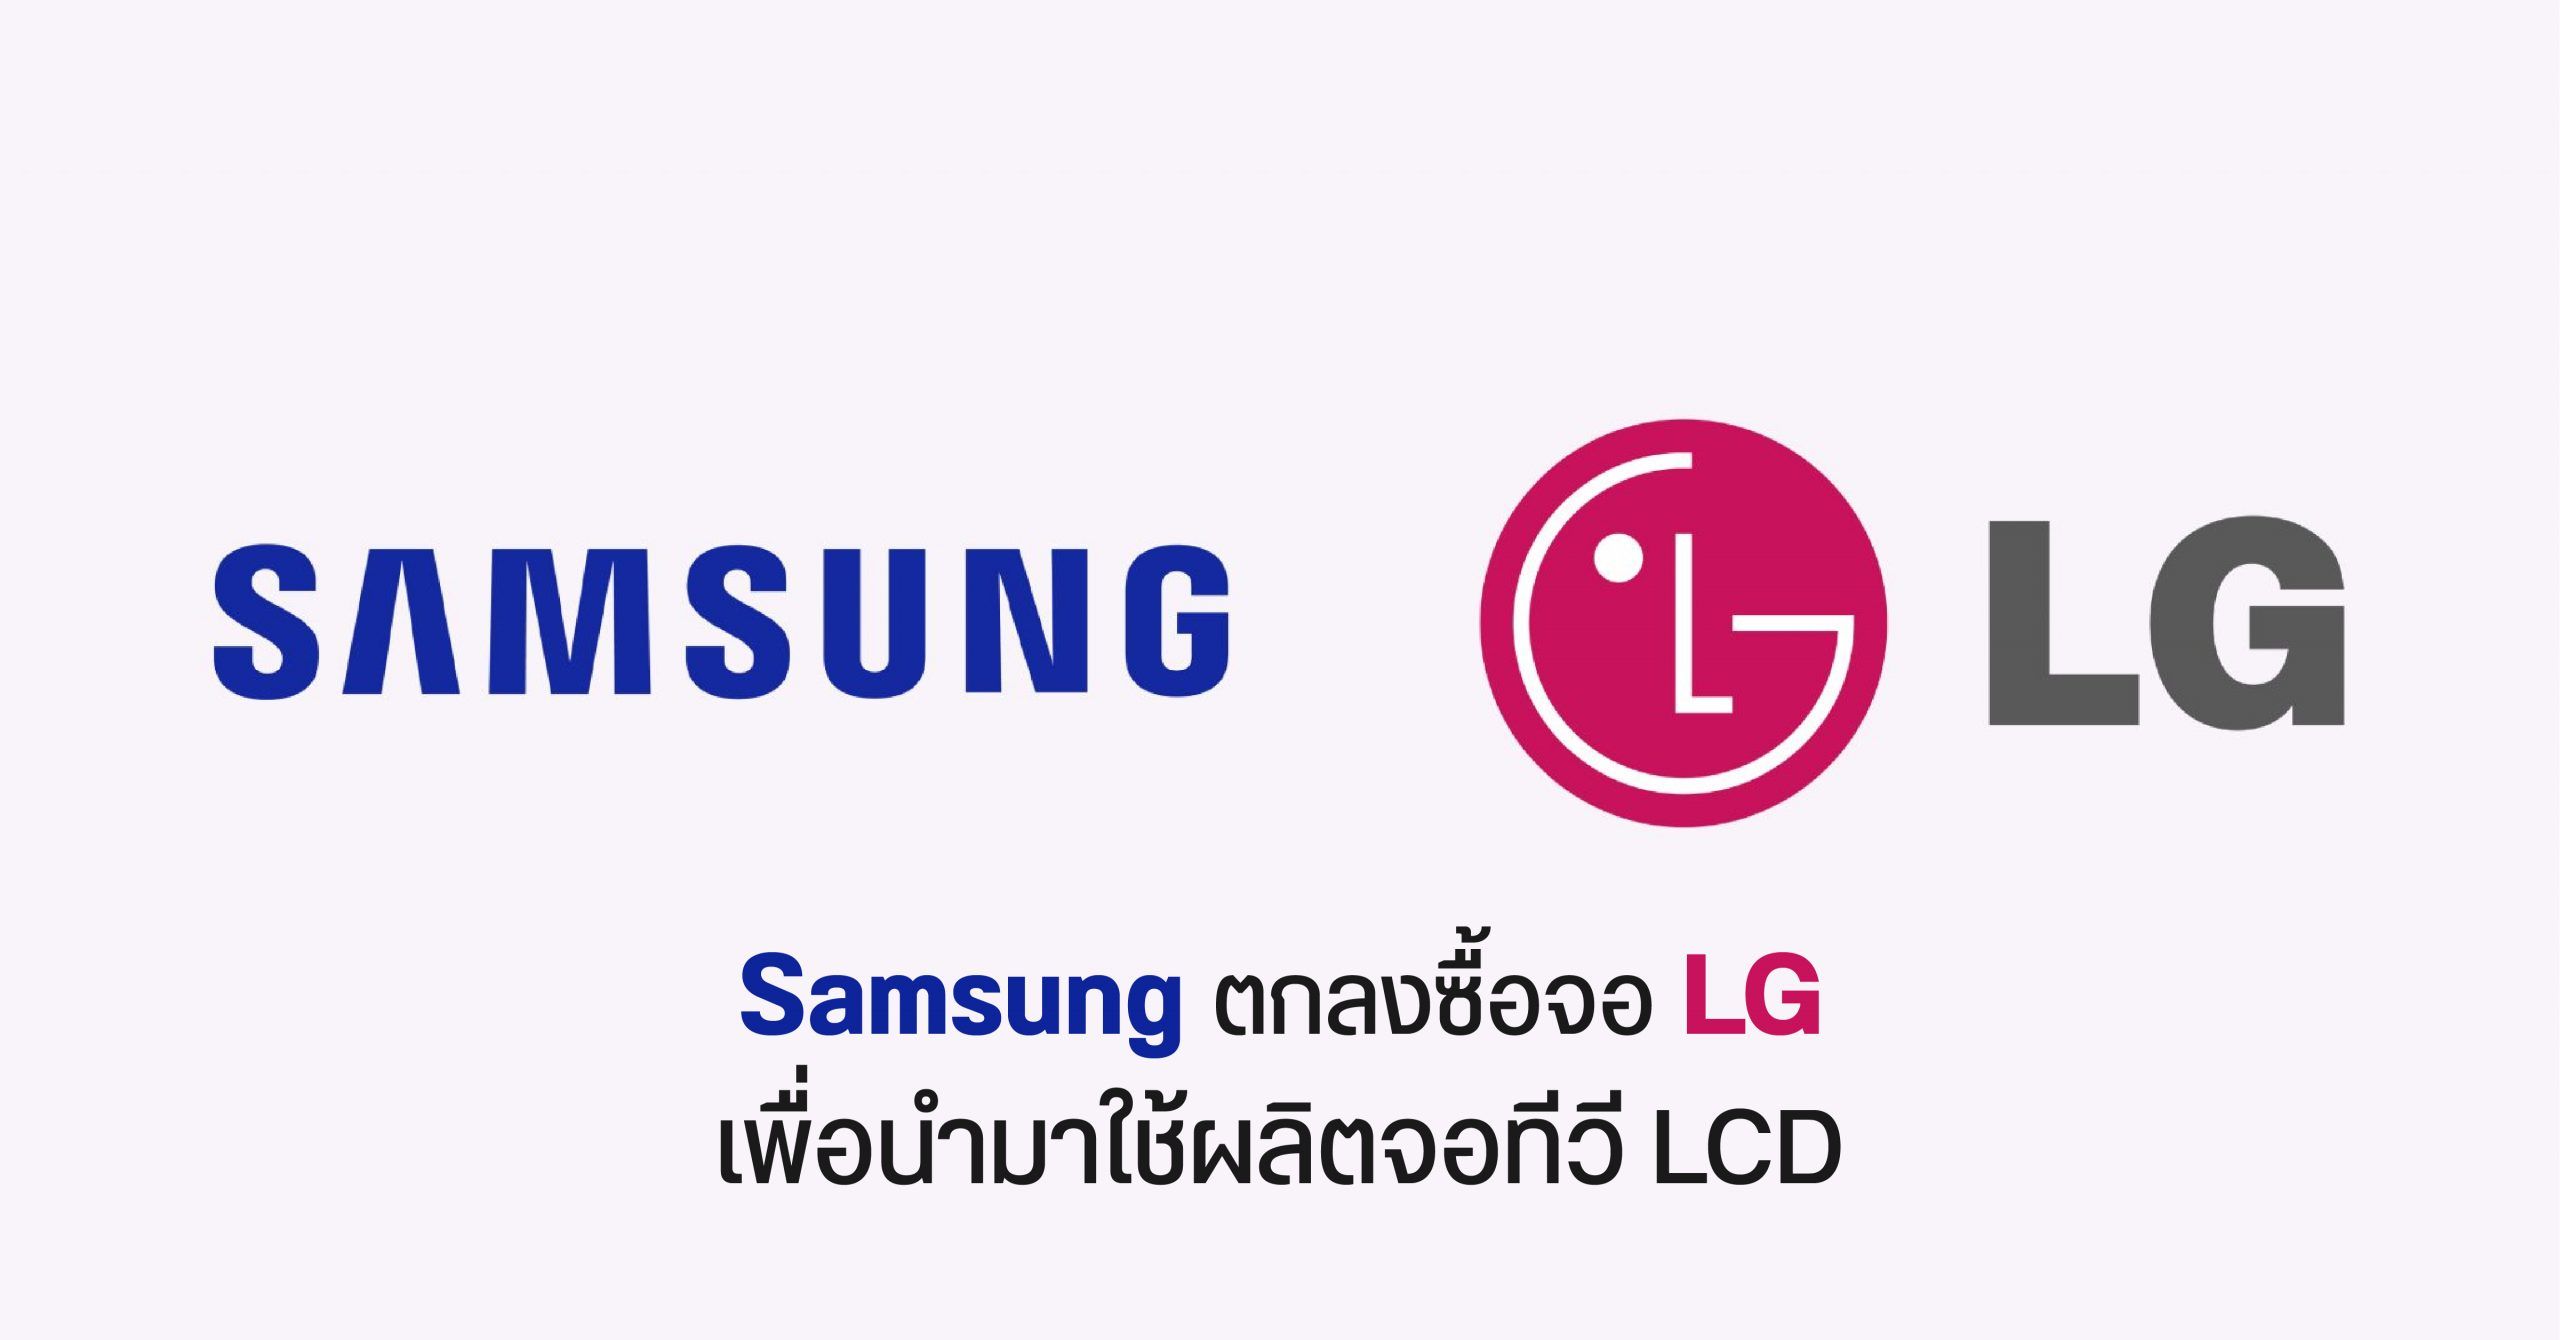 Samsung มีโอกาสซื้อจอจาก LG เพื่อนำไปใช้ผลิตทีวี LCD หลังจากบริษัทหันไปผลิตจอ OLED เพียงอย่างเดียว